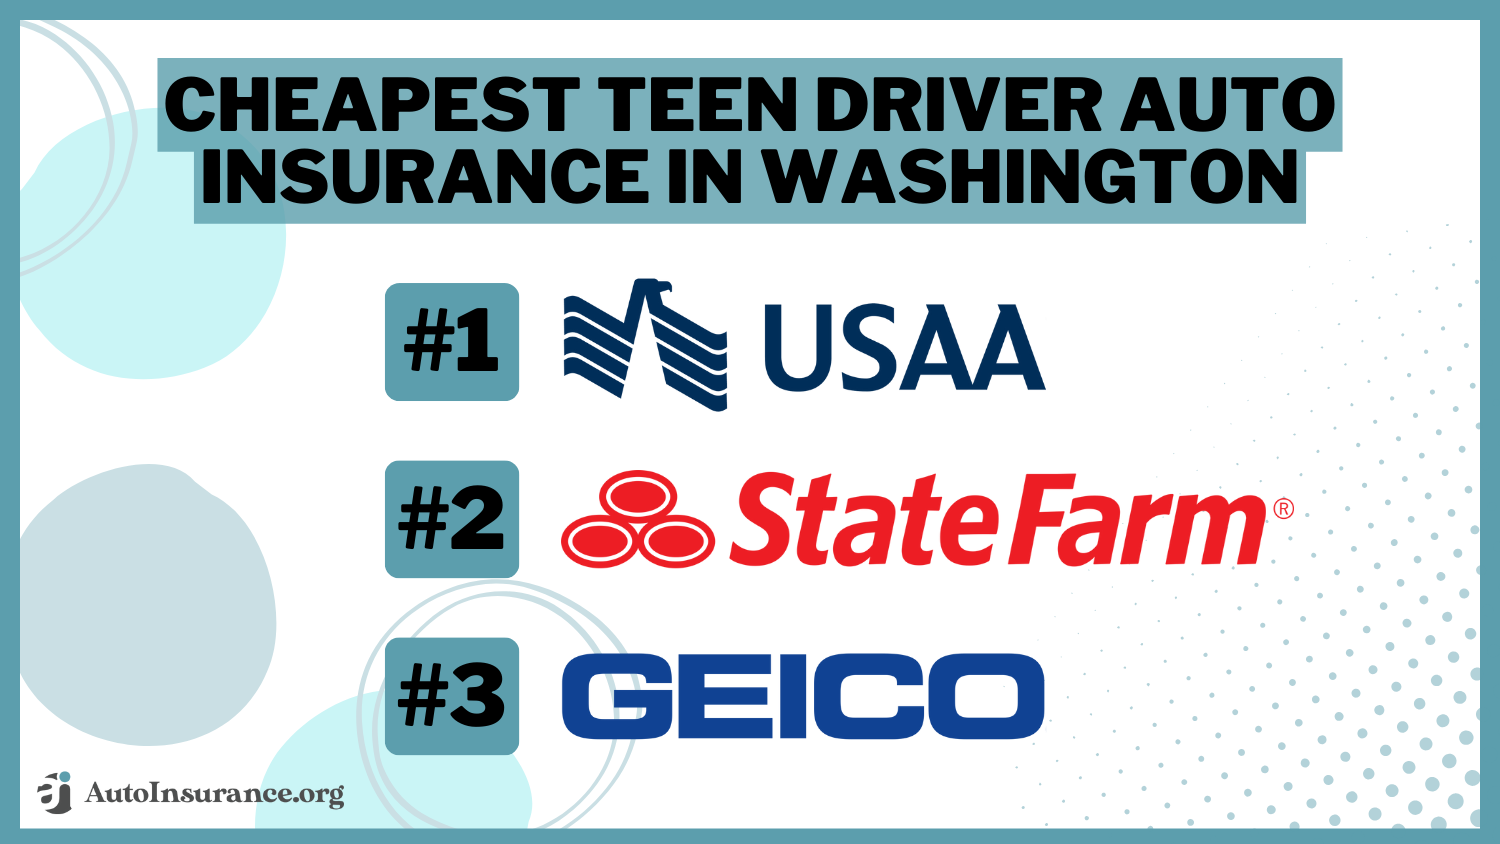 Cheapest Teen Driver Auto Insurance in Washington - USAA, State Farm, Geico